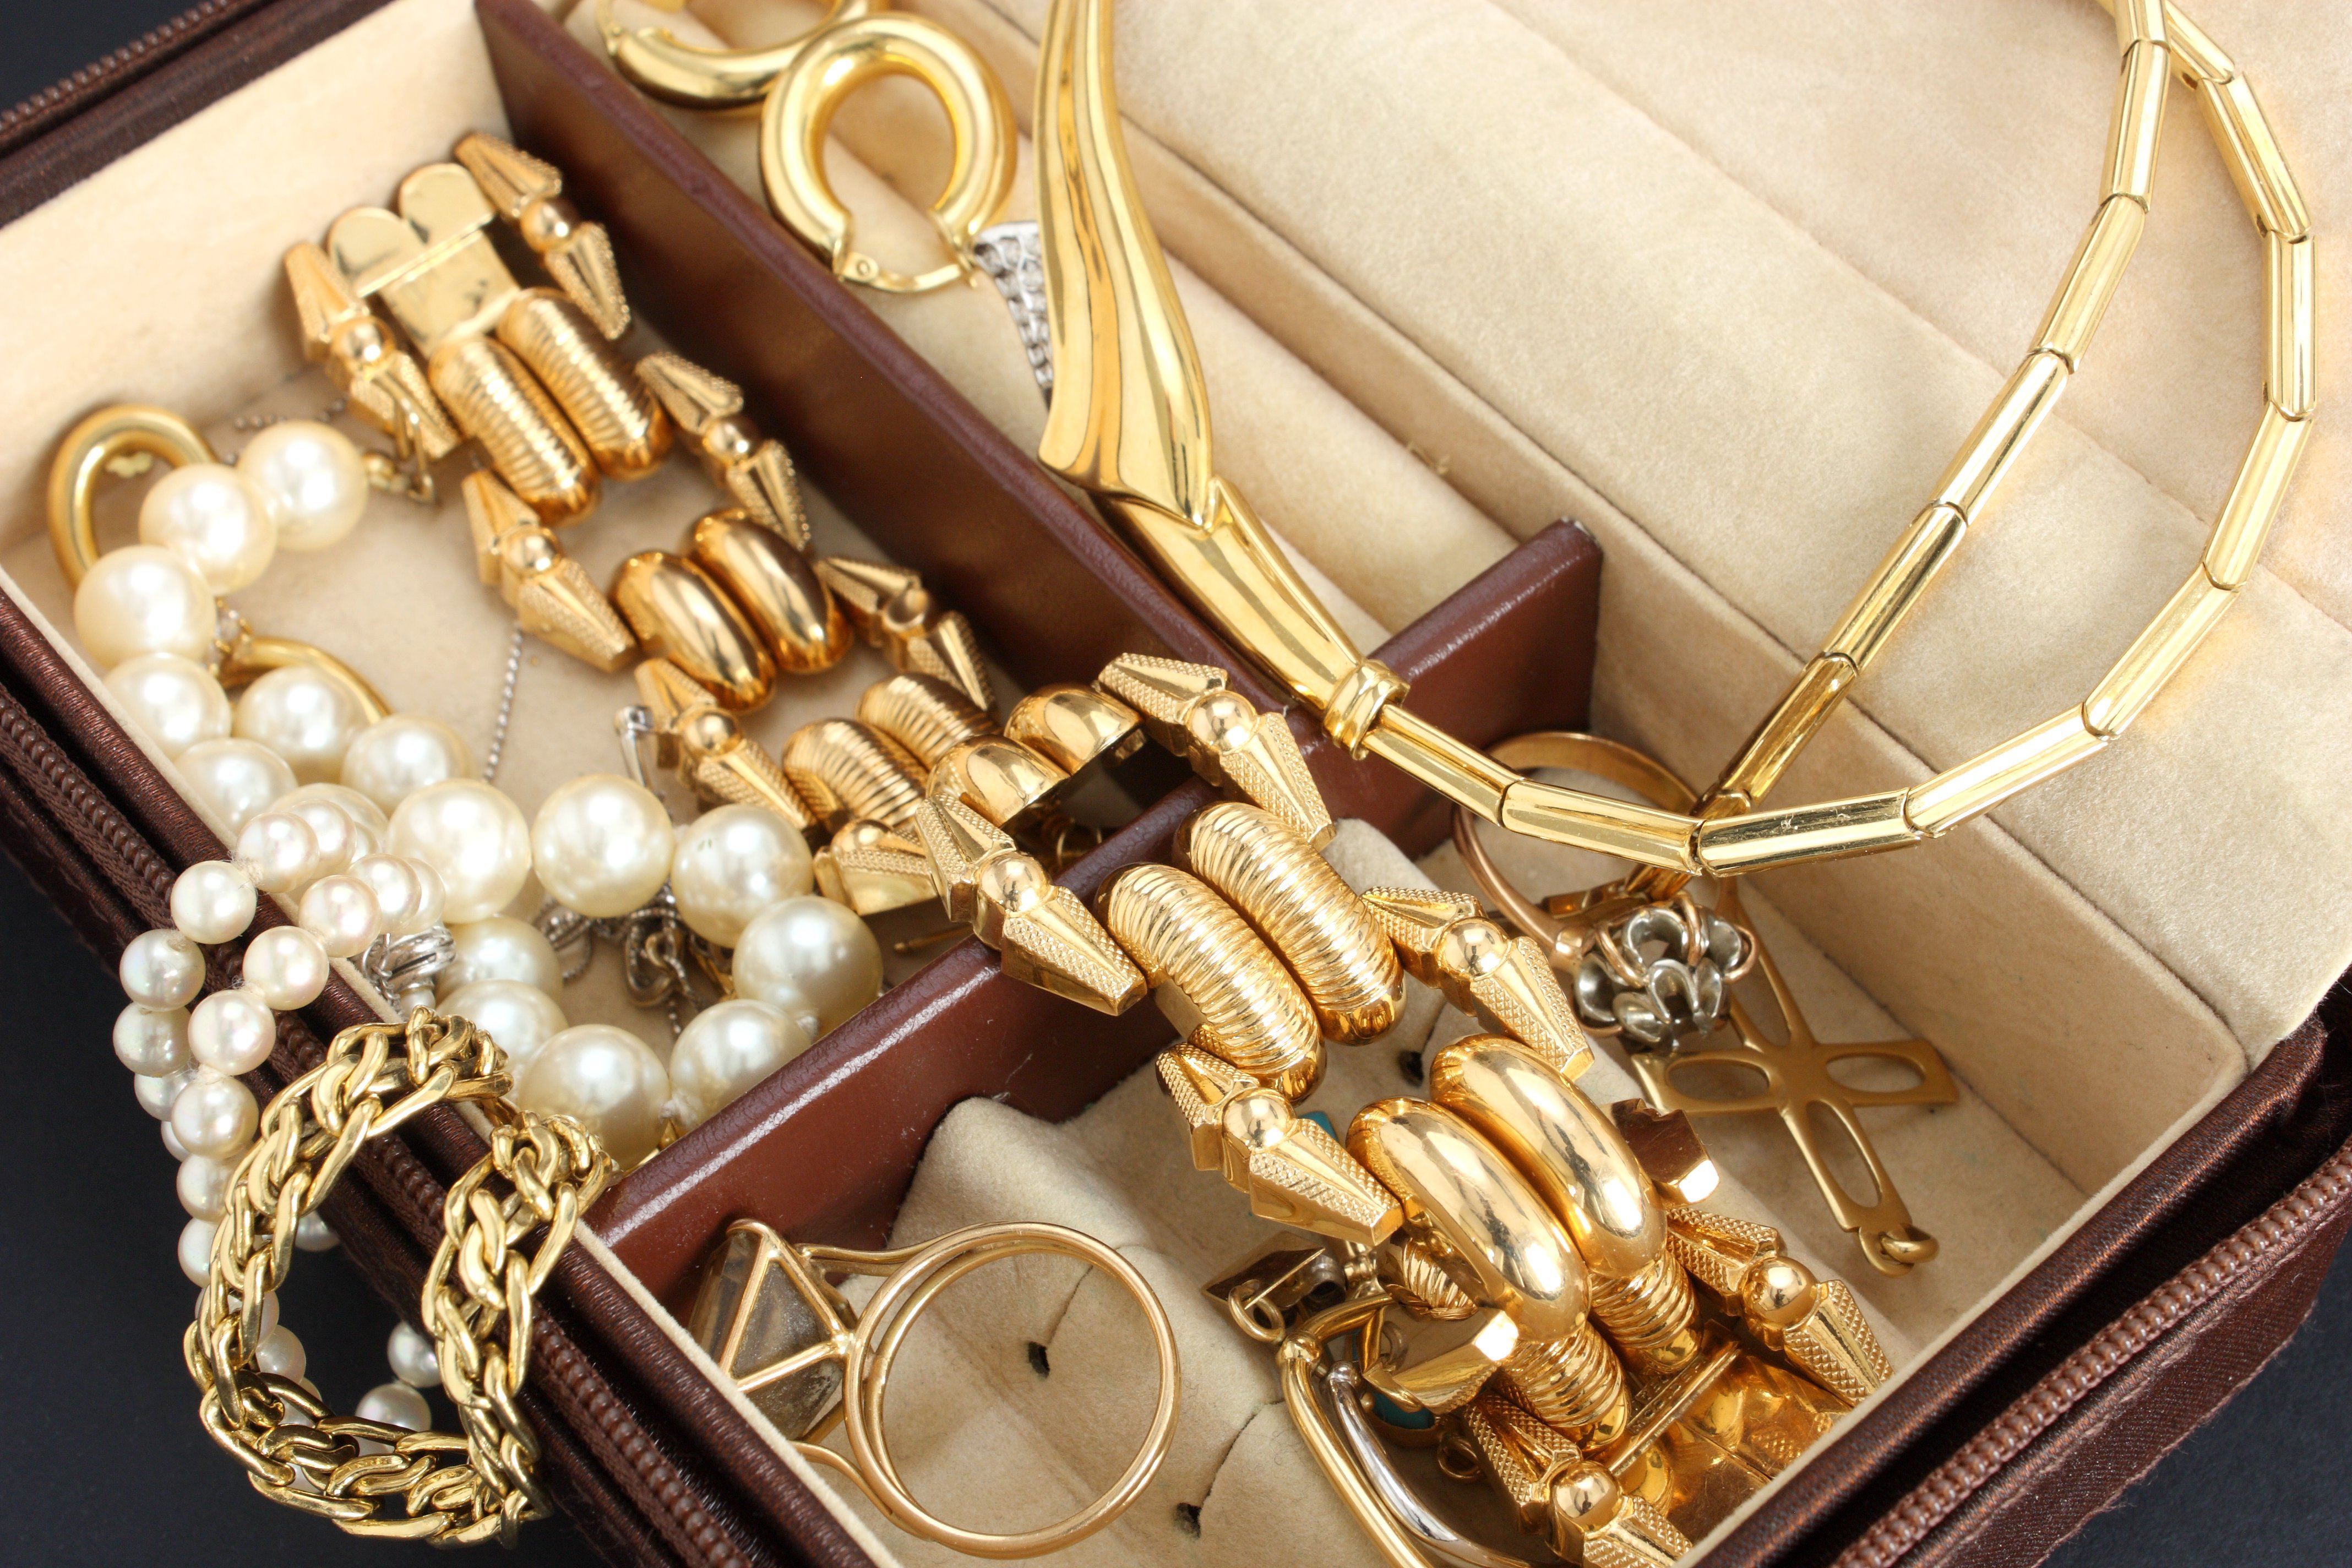 Bijoux de famille | Source : Shutterstock